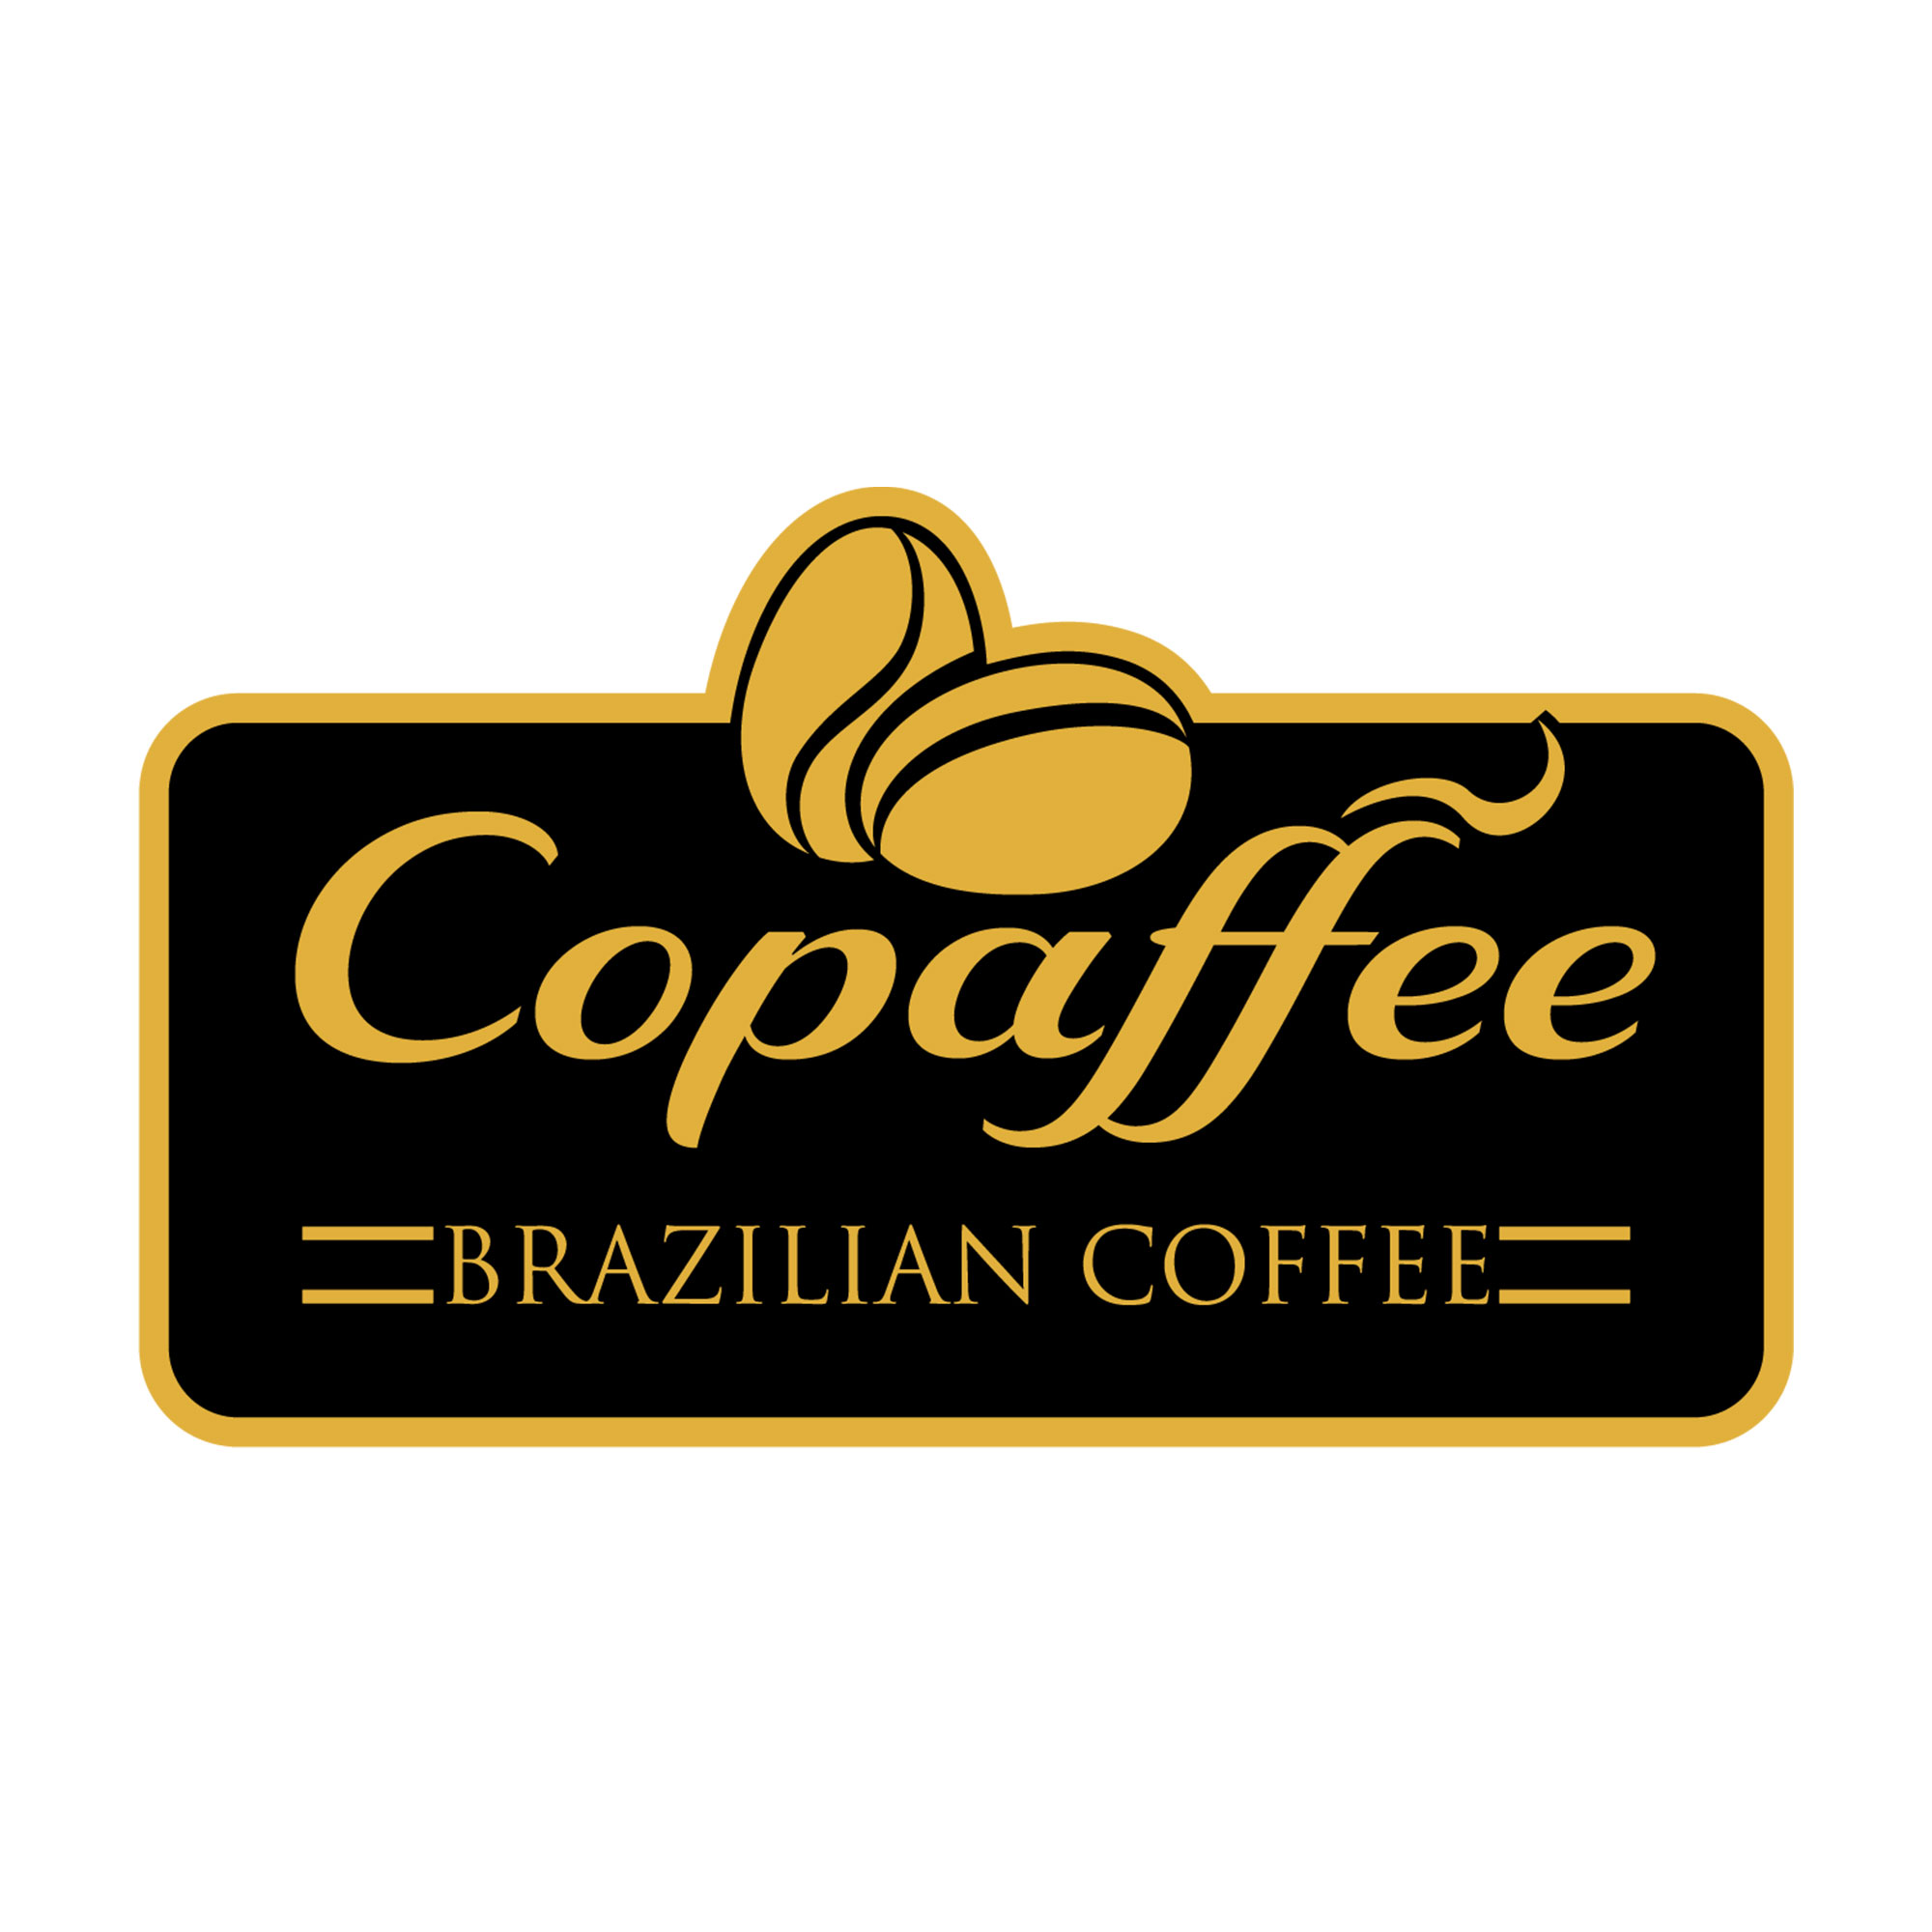 Desenvolvimento de Logotipo - Copaffee